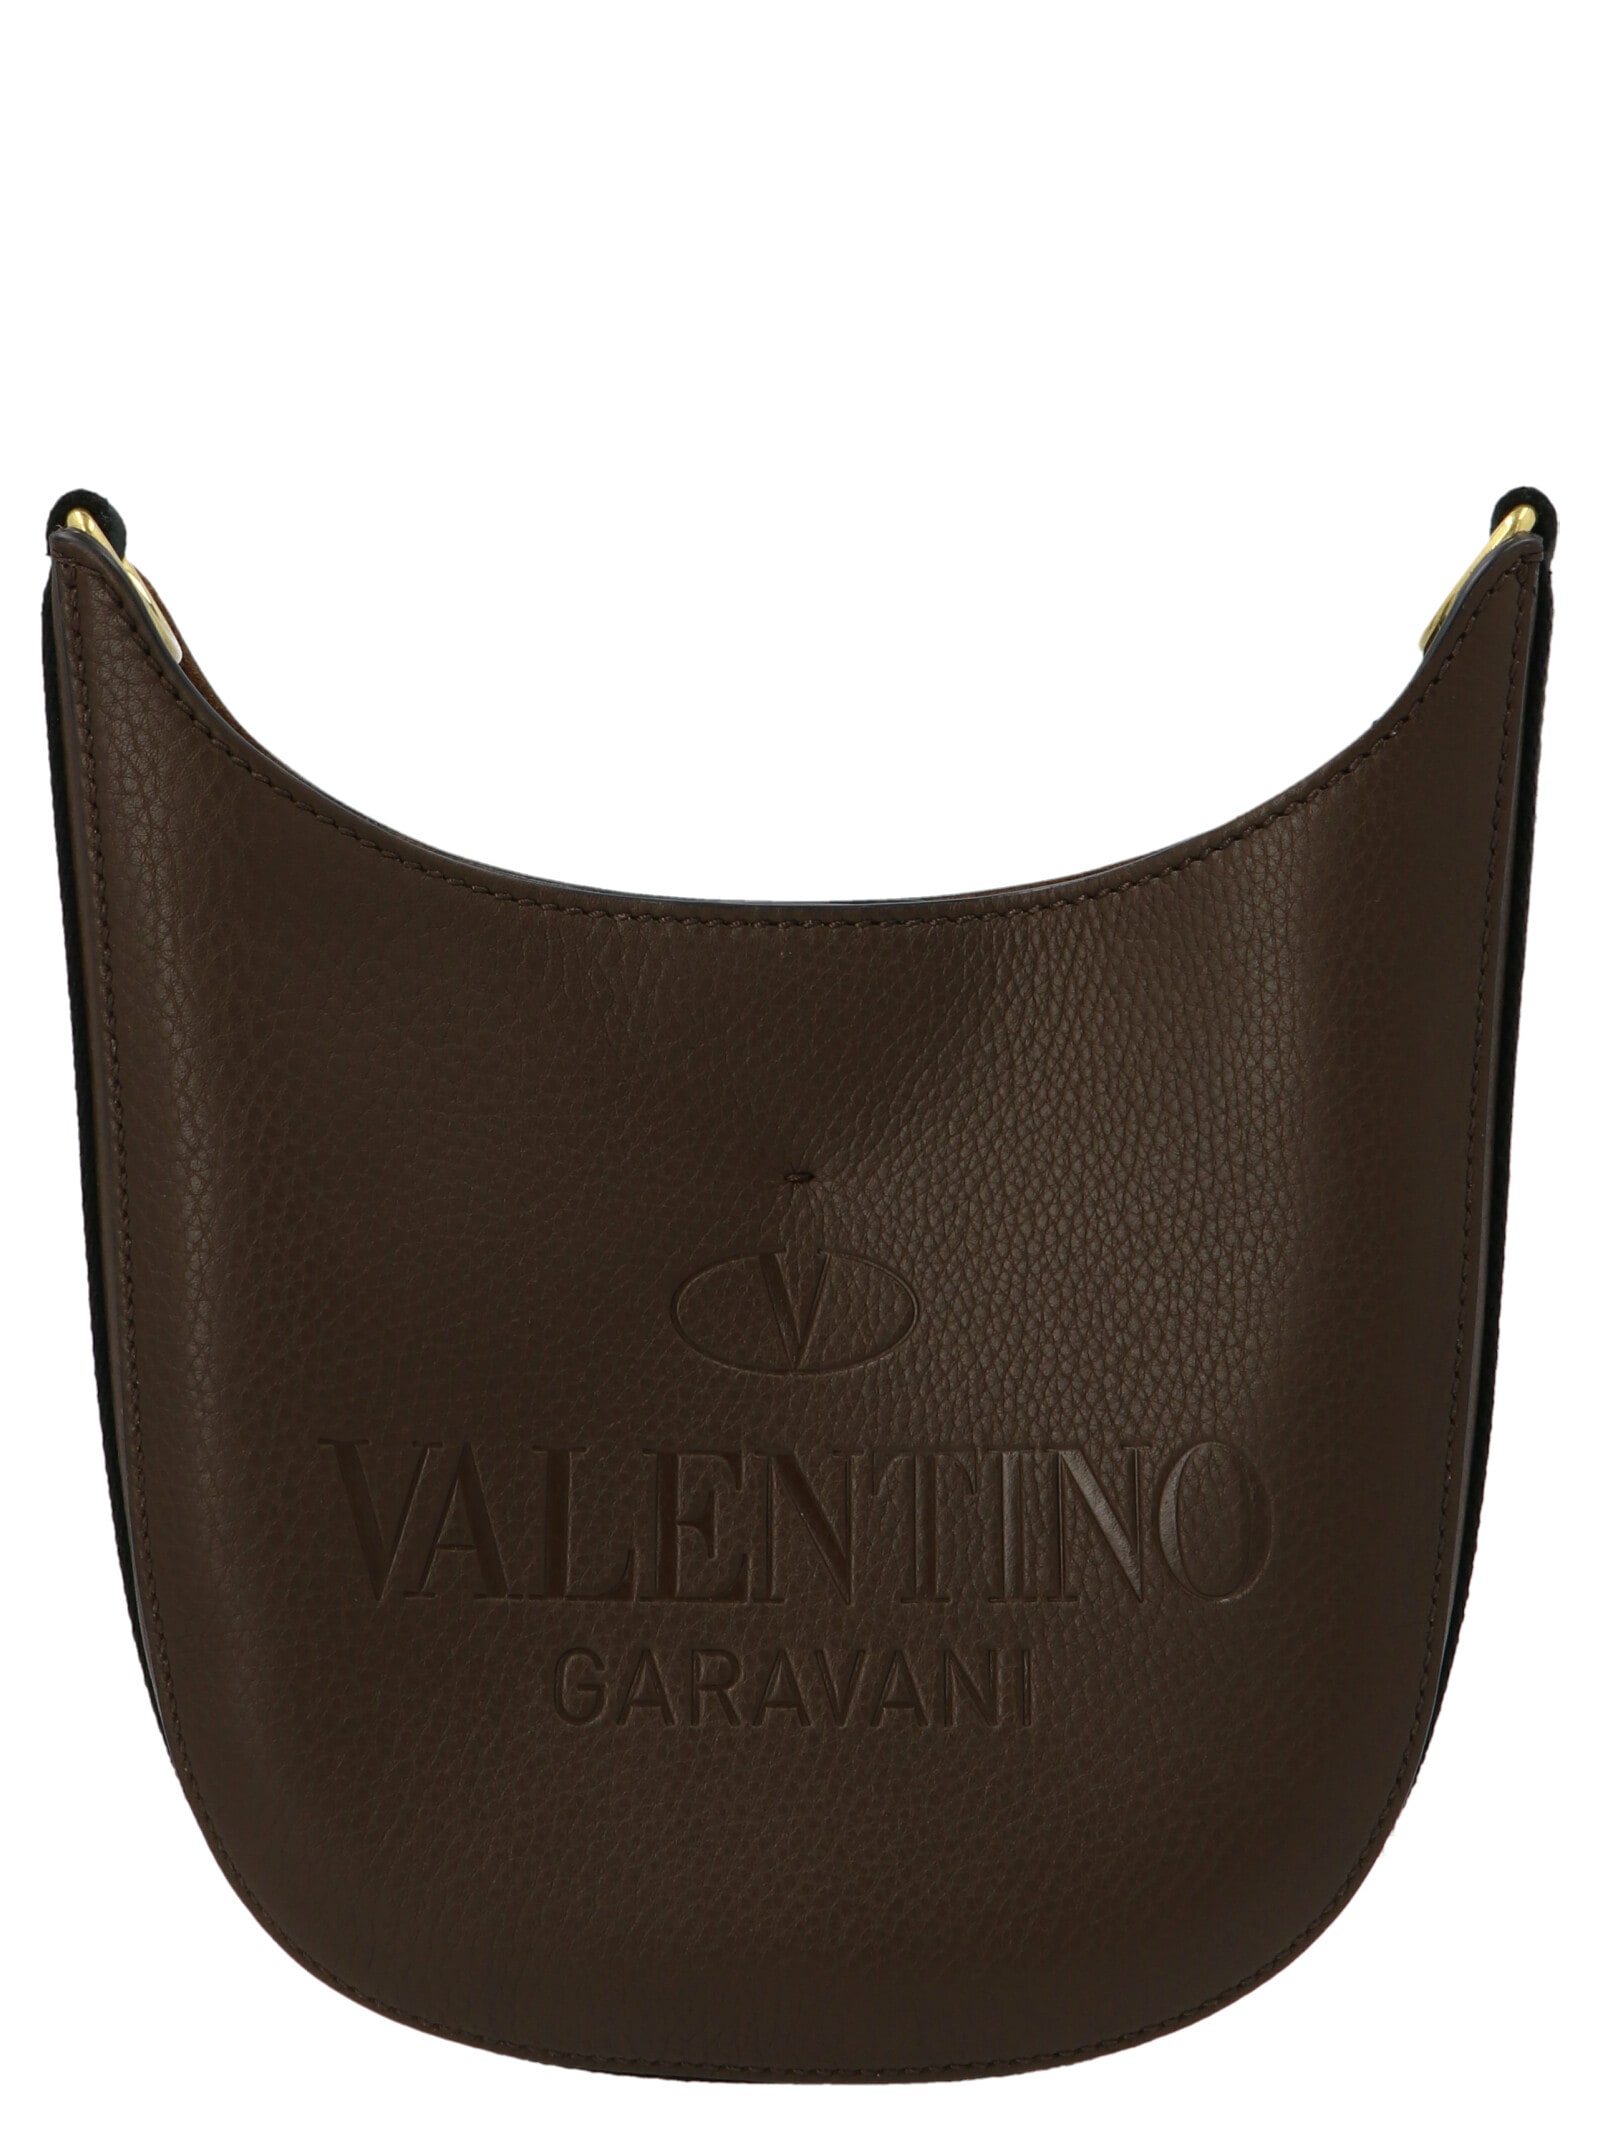 Valentino Garavani hobo Small Bag